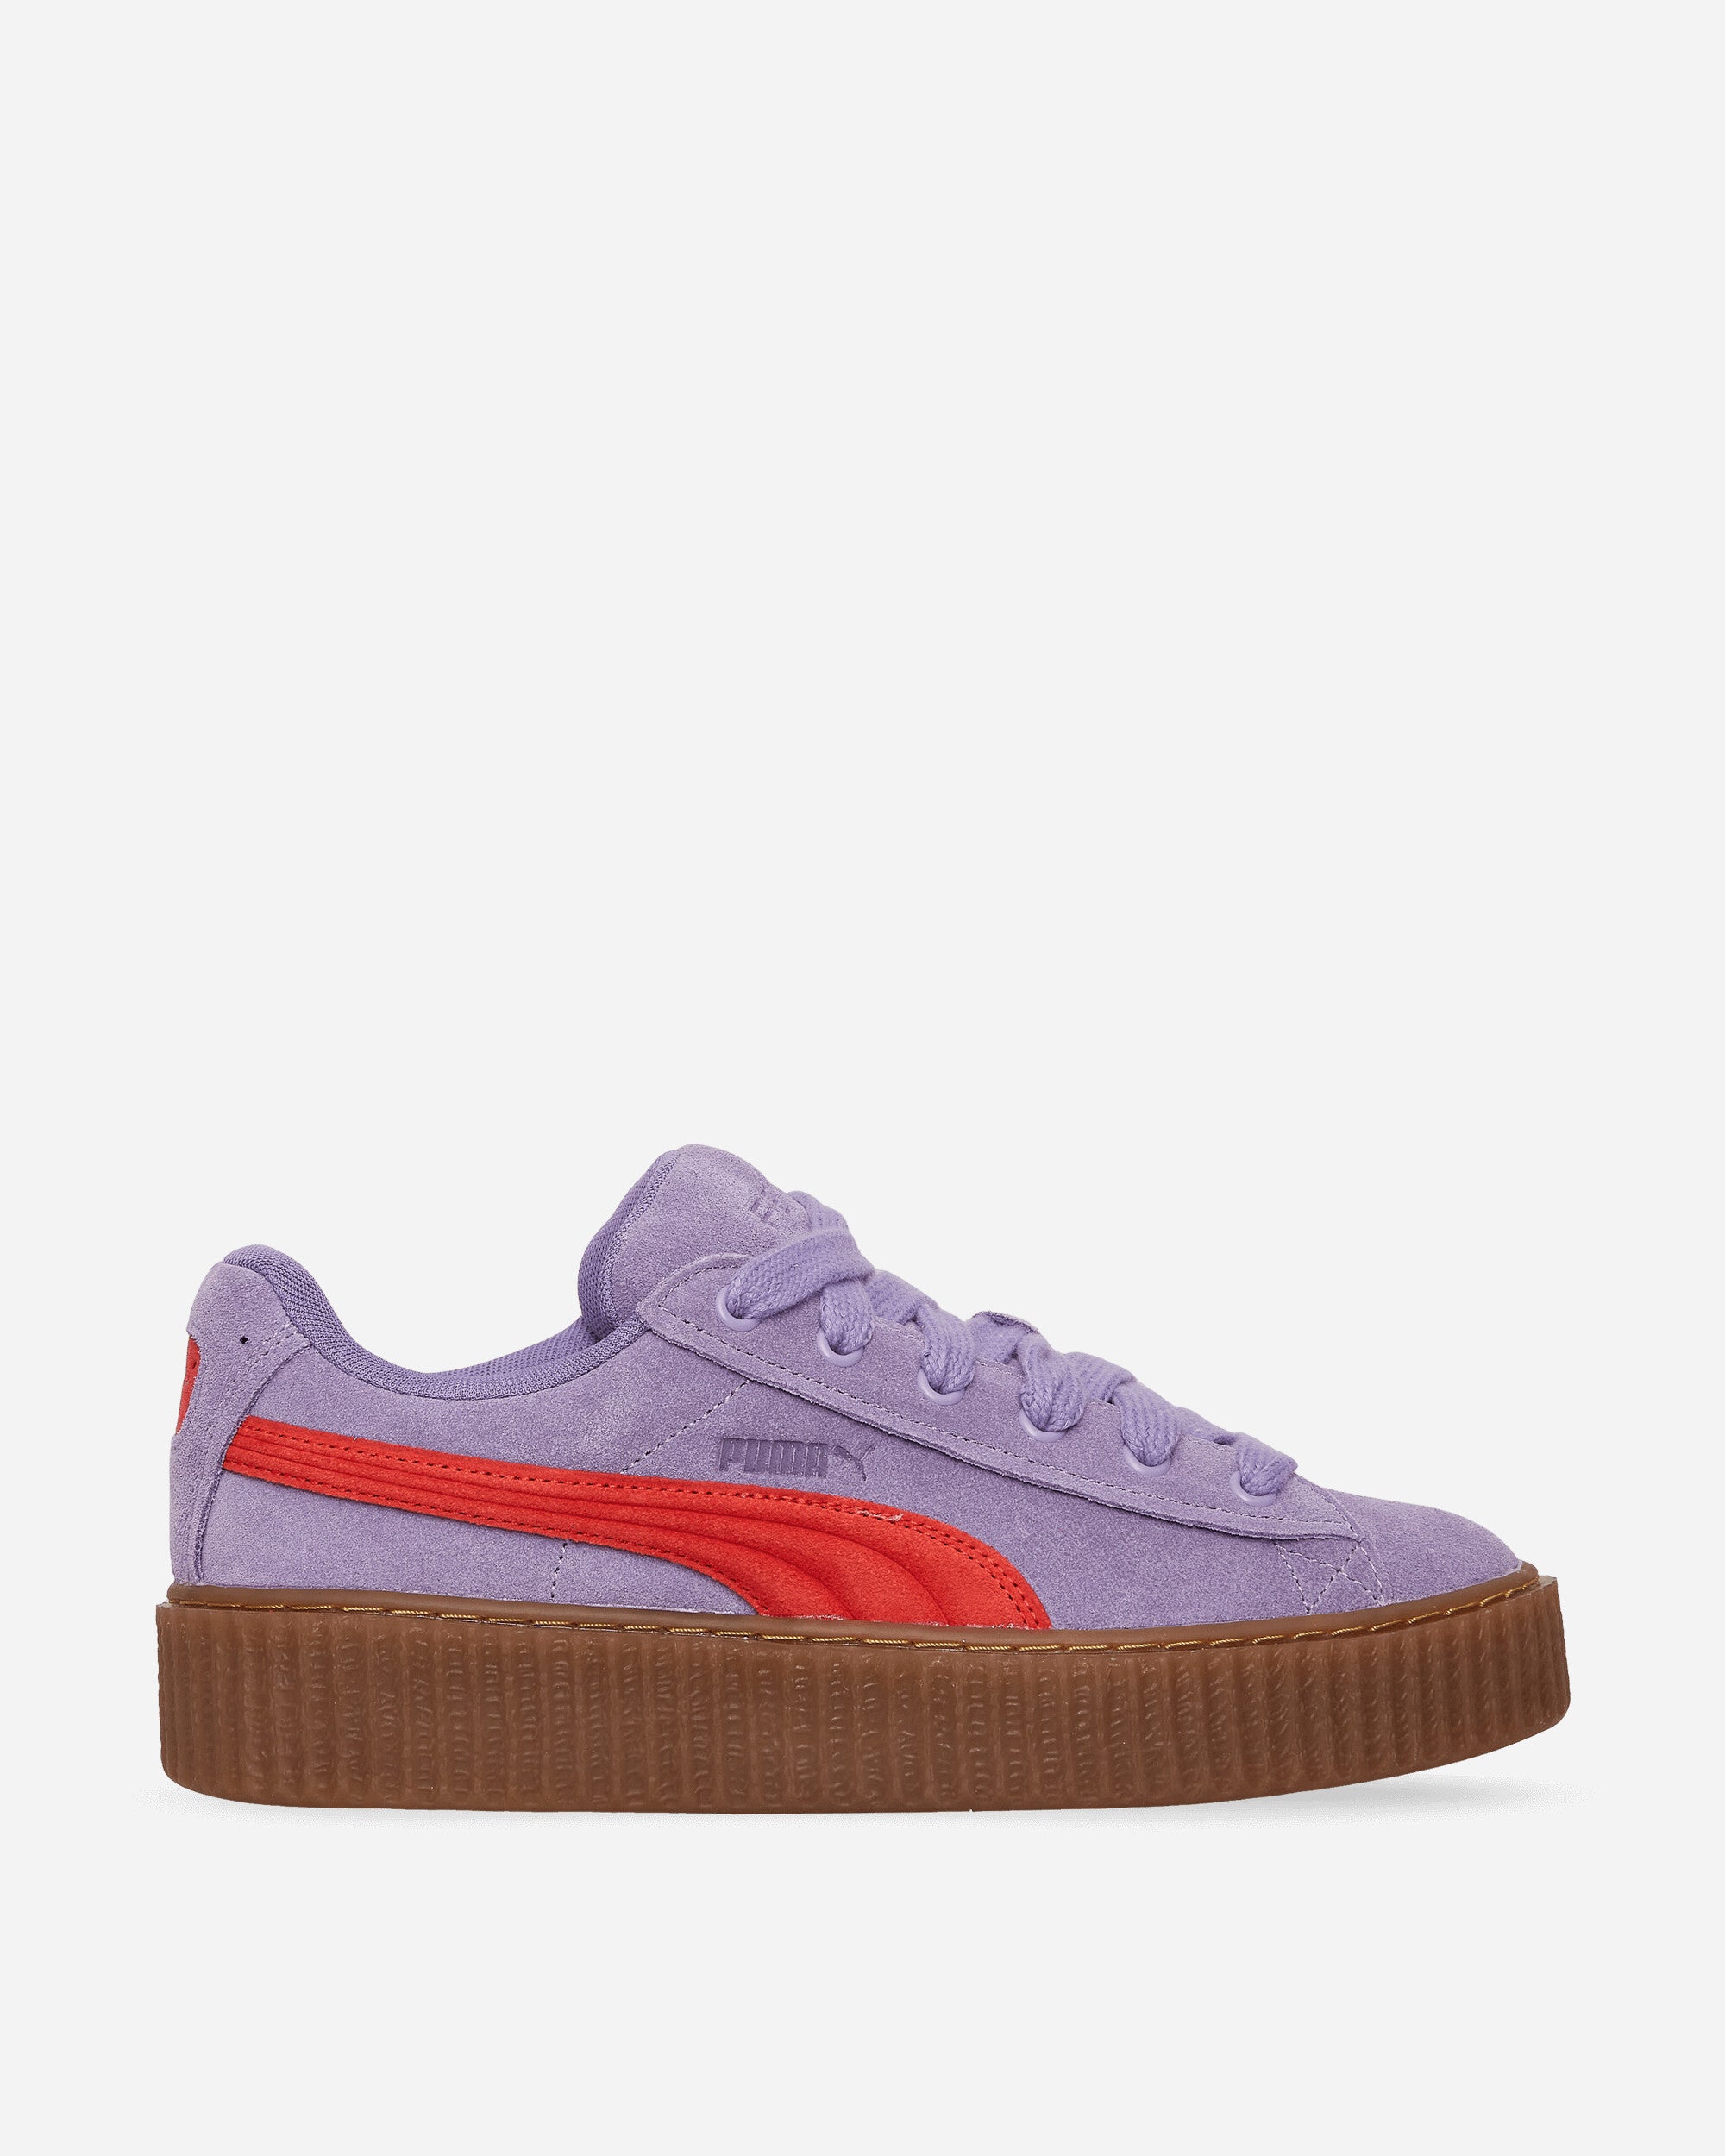 FENTY Creeper Phatty Sneakers Lavender Alert / Burnt Red